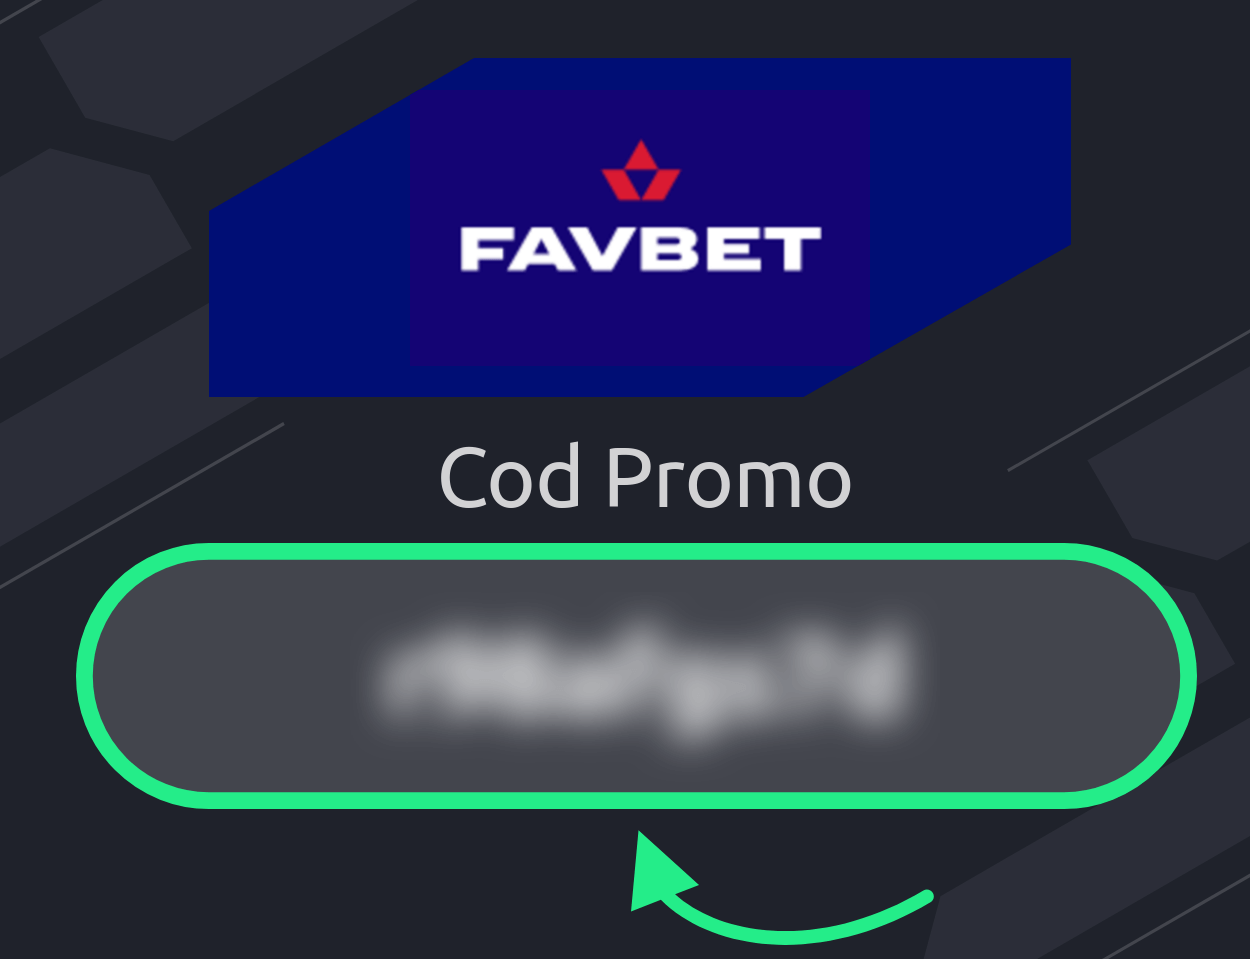 Favbet Cod Promo